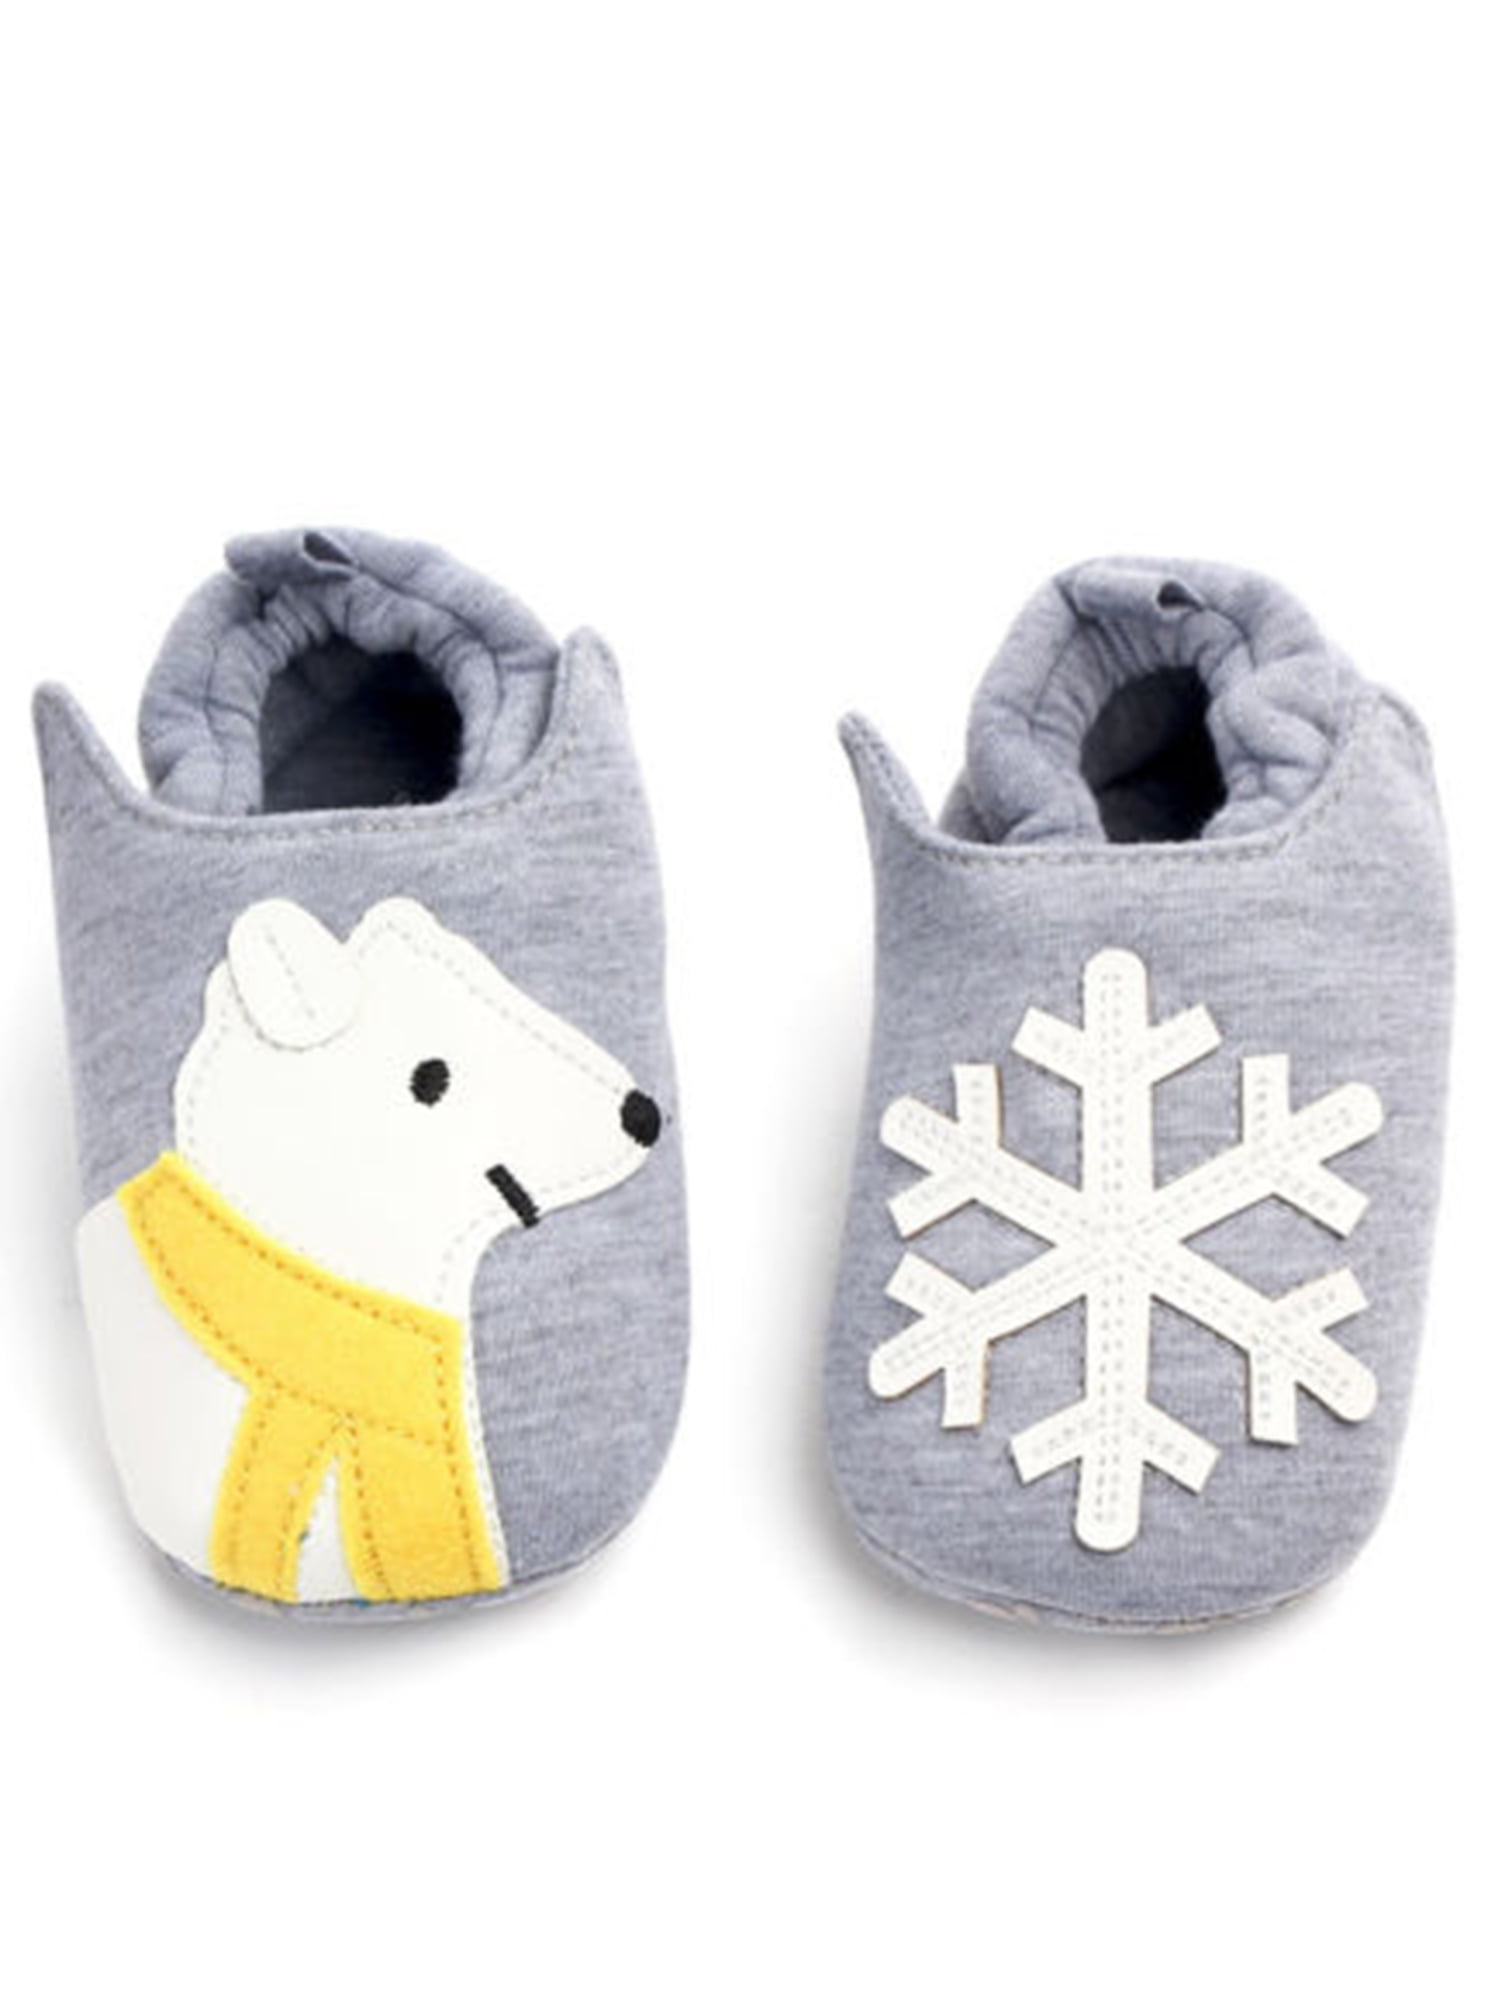 CW_ Baby Cute Cartoon Non-slip Cotton Toddler Floor Socks Kids Shoes Slipper Soc 